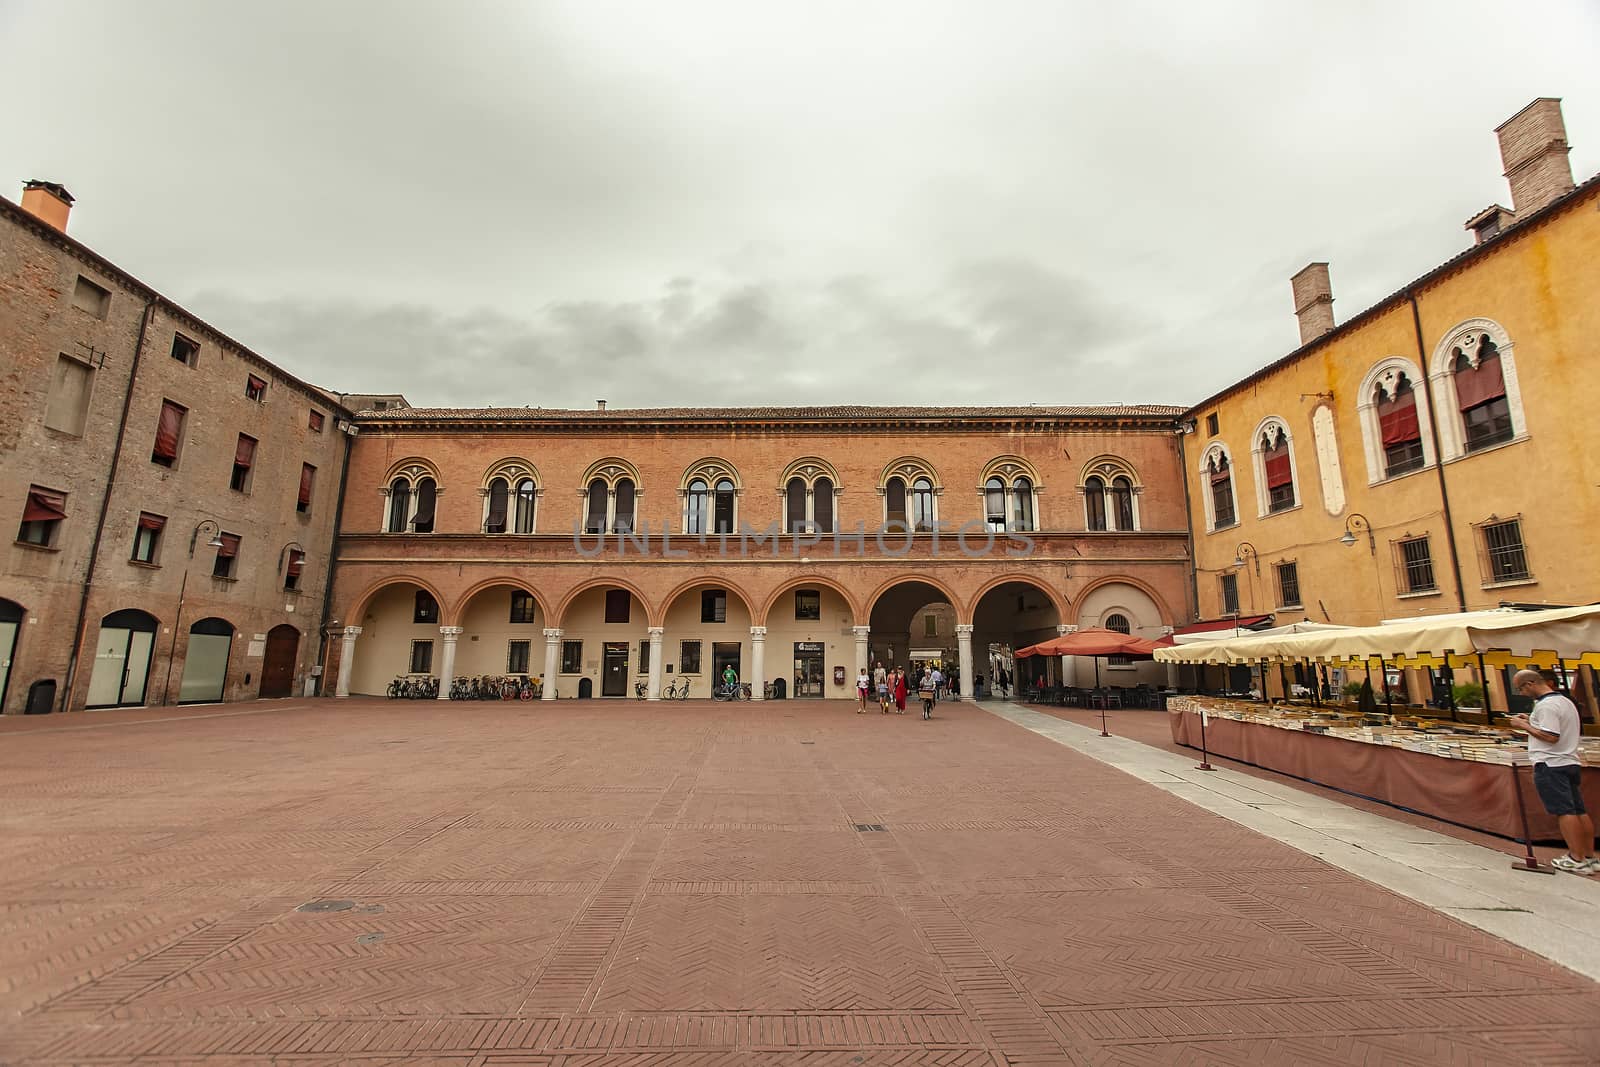 FERRARA, ITALY 29 JULY 2020 : Piazza municipale in Ferrara, a famous square in the historical city center of the Italian city